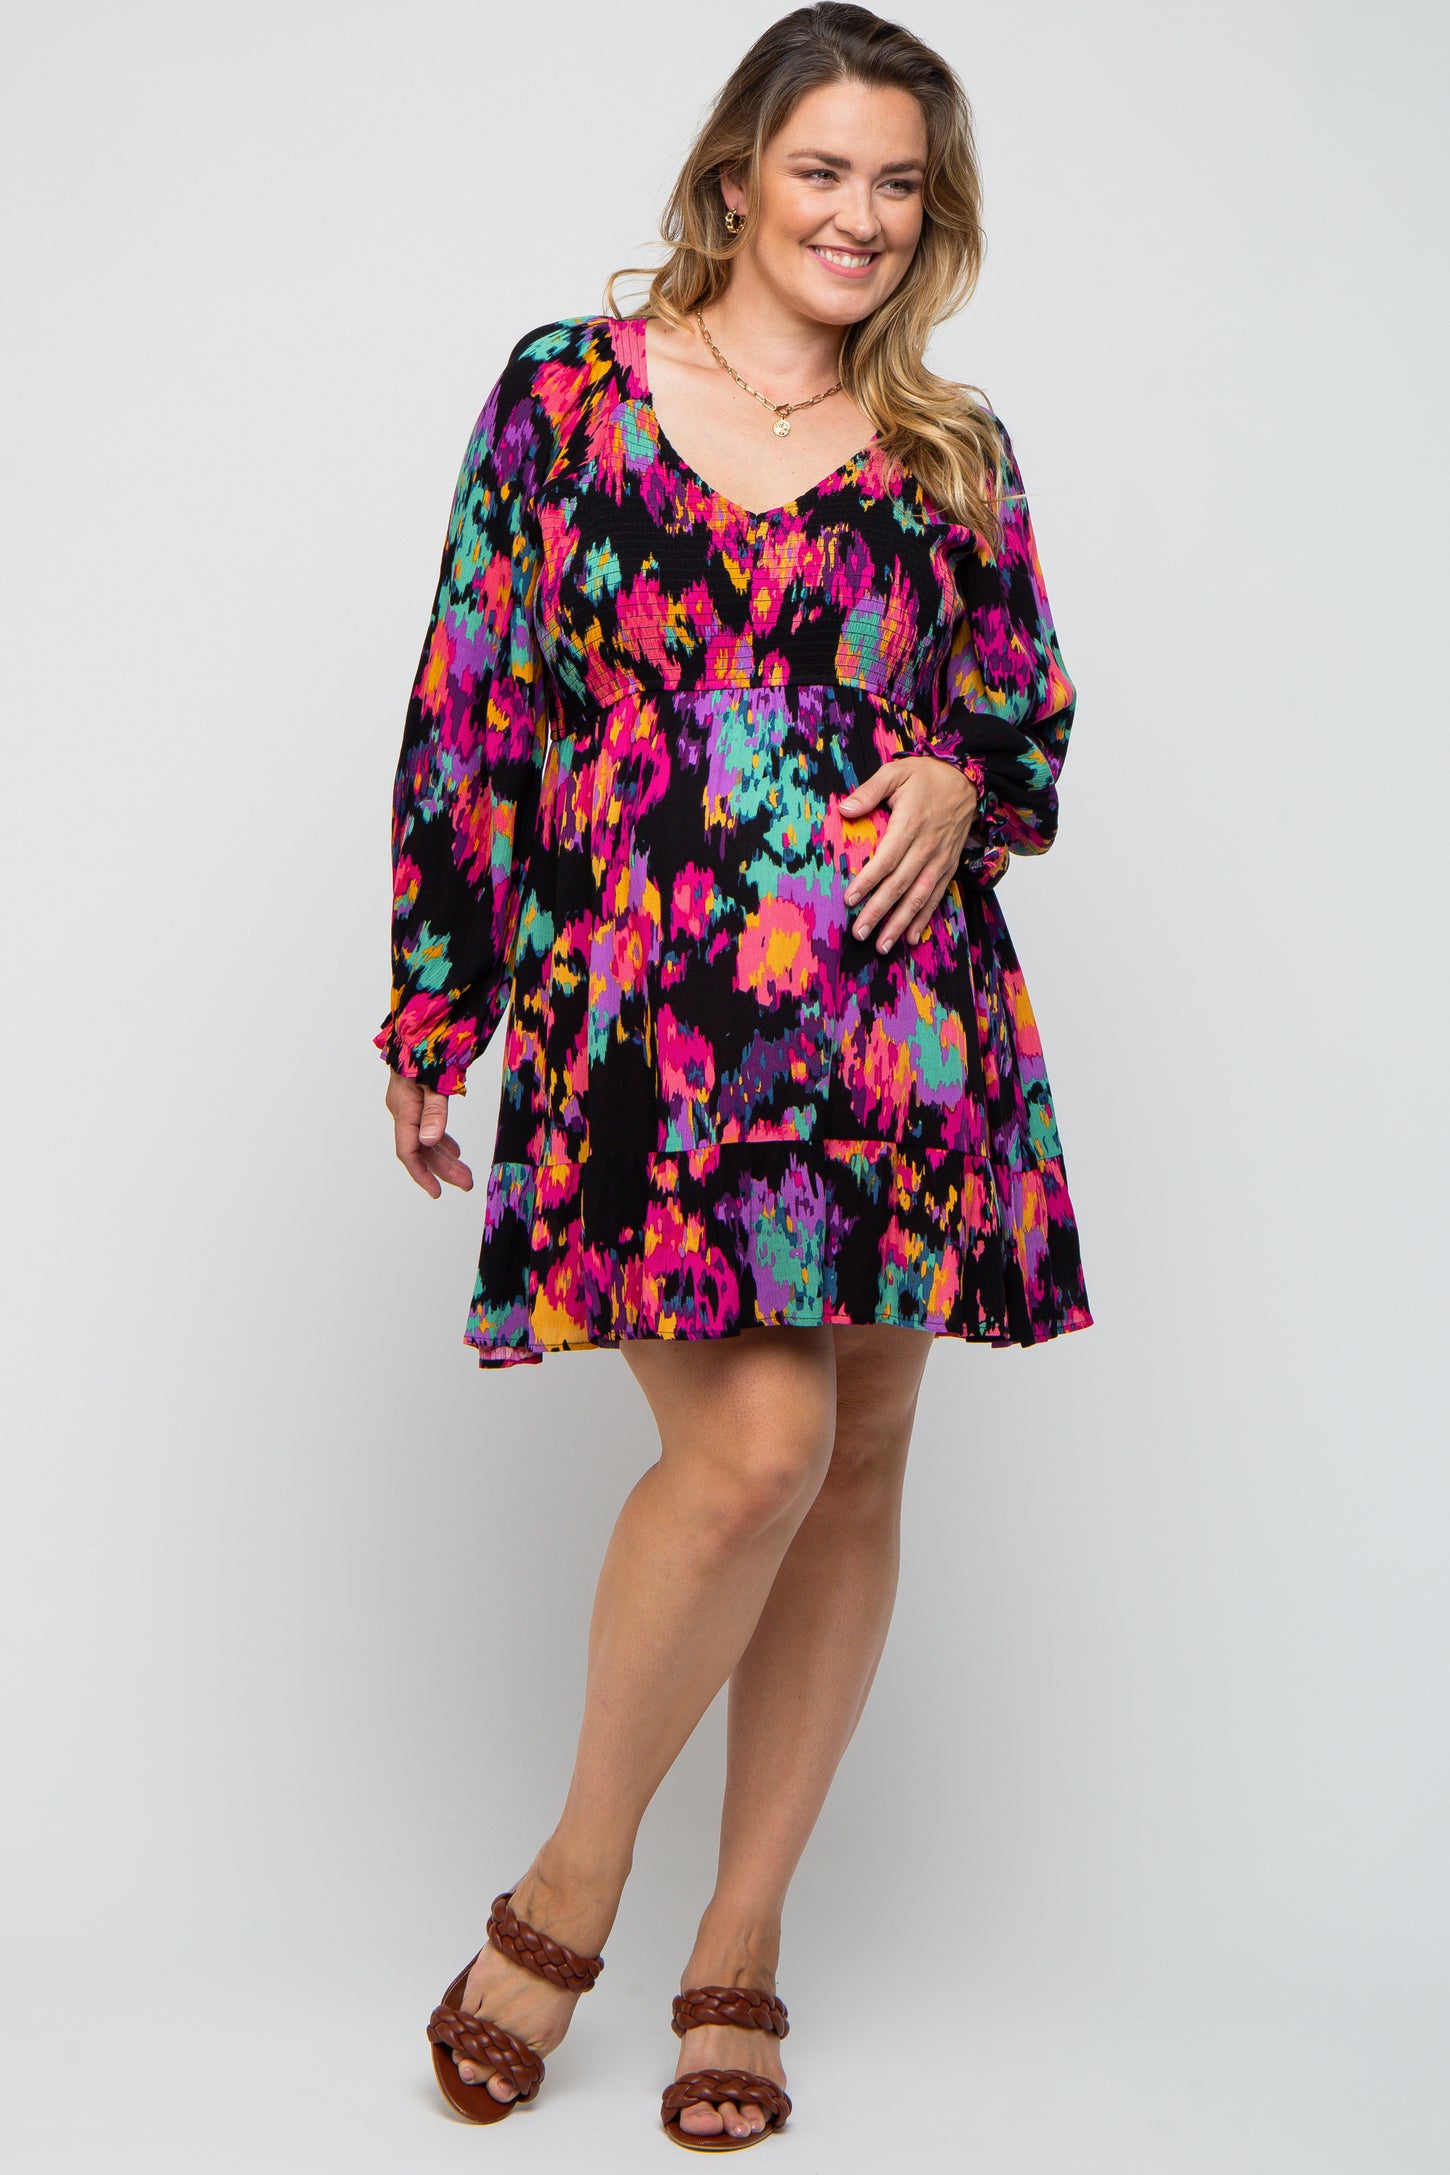 Smocked Cuff Velvet Dress (Plus Size - Magenta) – In Pursuit